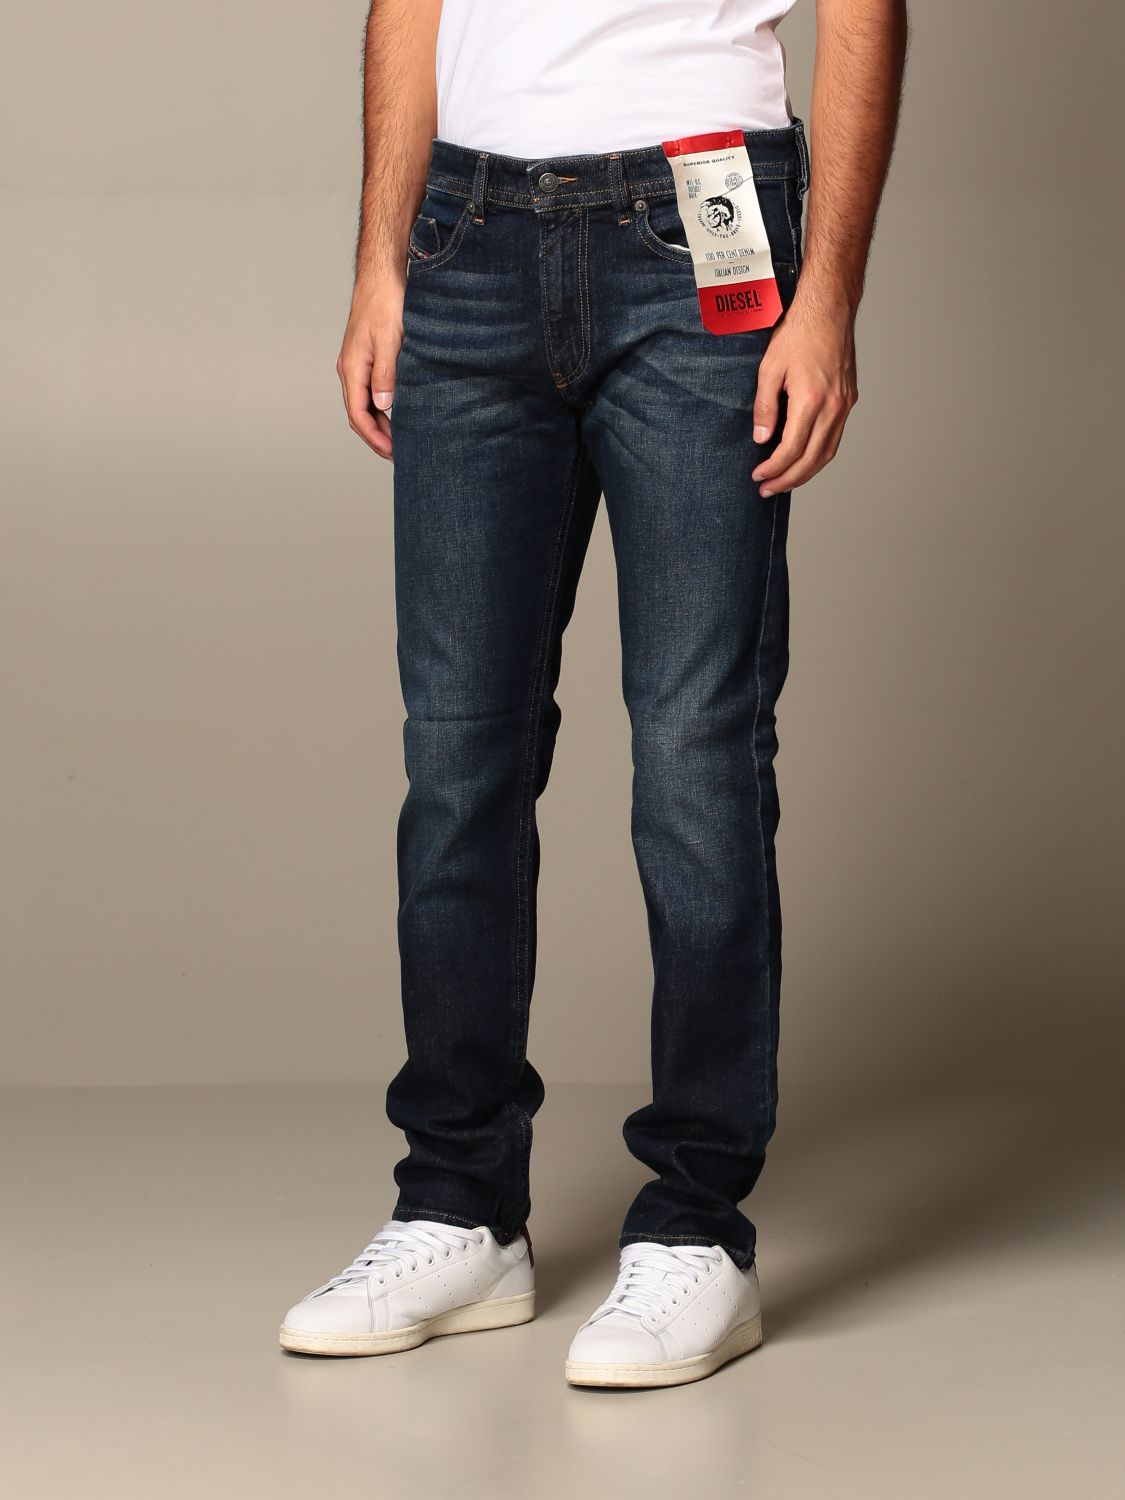 Diesel Outlet: Thommer jeans in skinny used - Denim | Diesel jeans 00SB6D 009HN online GIGLIO.COM